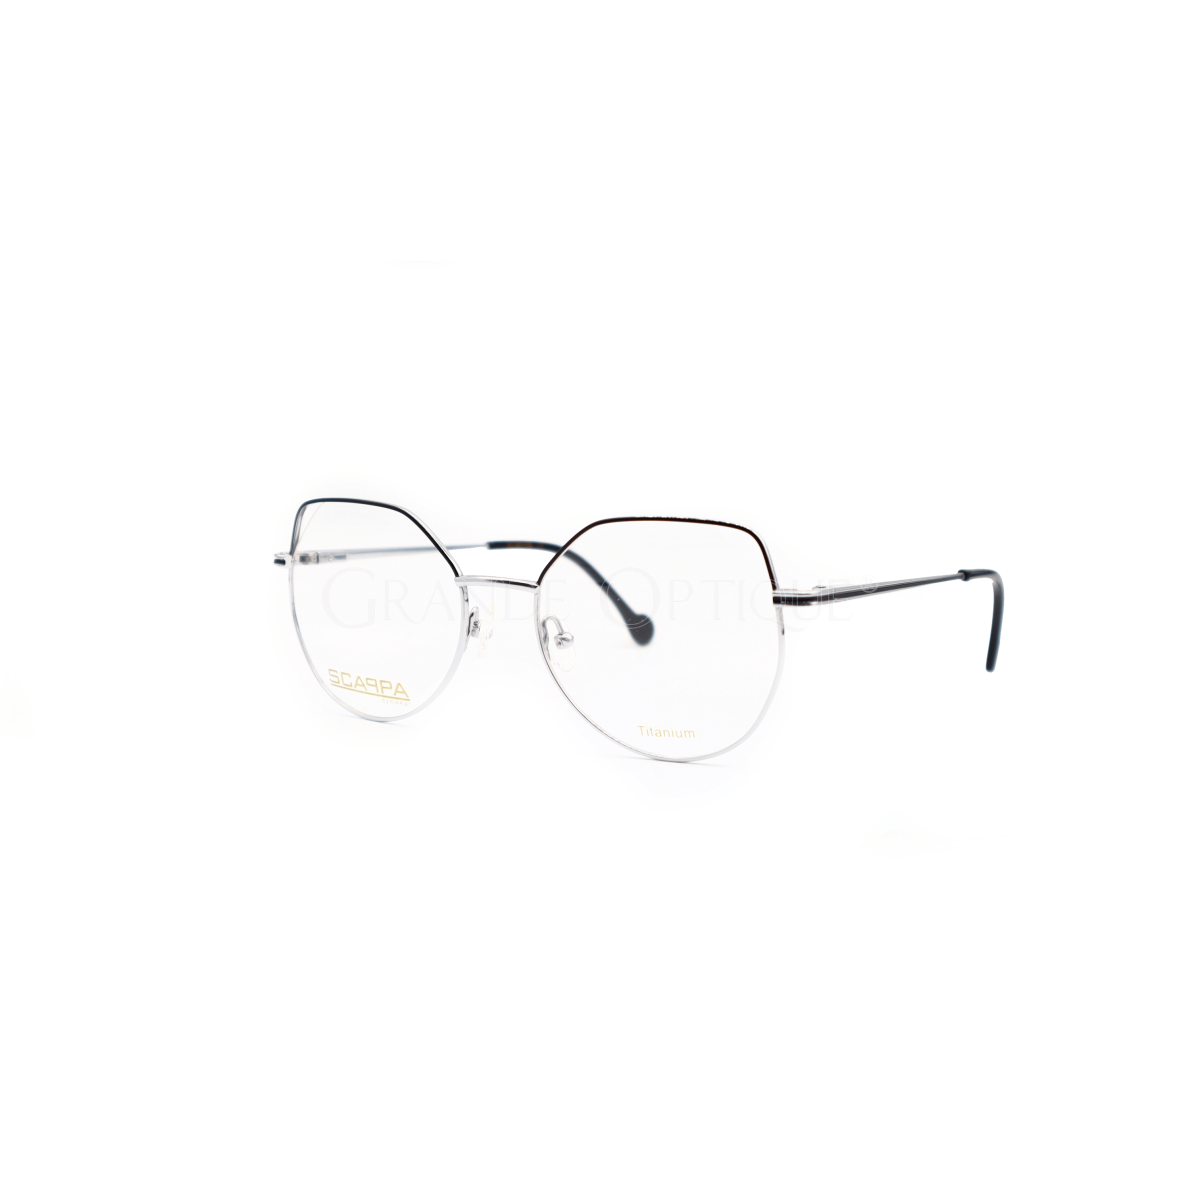 Rame de ochelari Scappa 4055